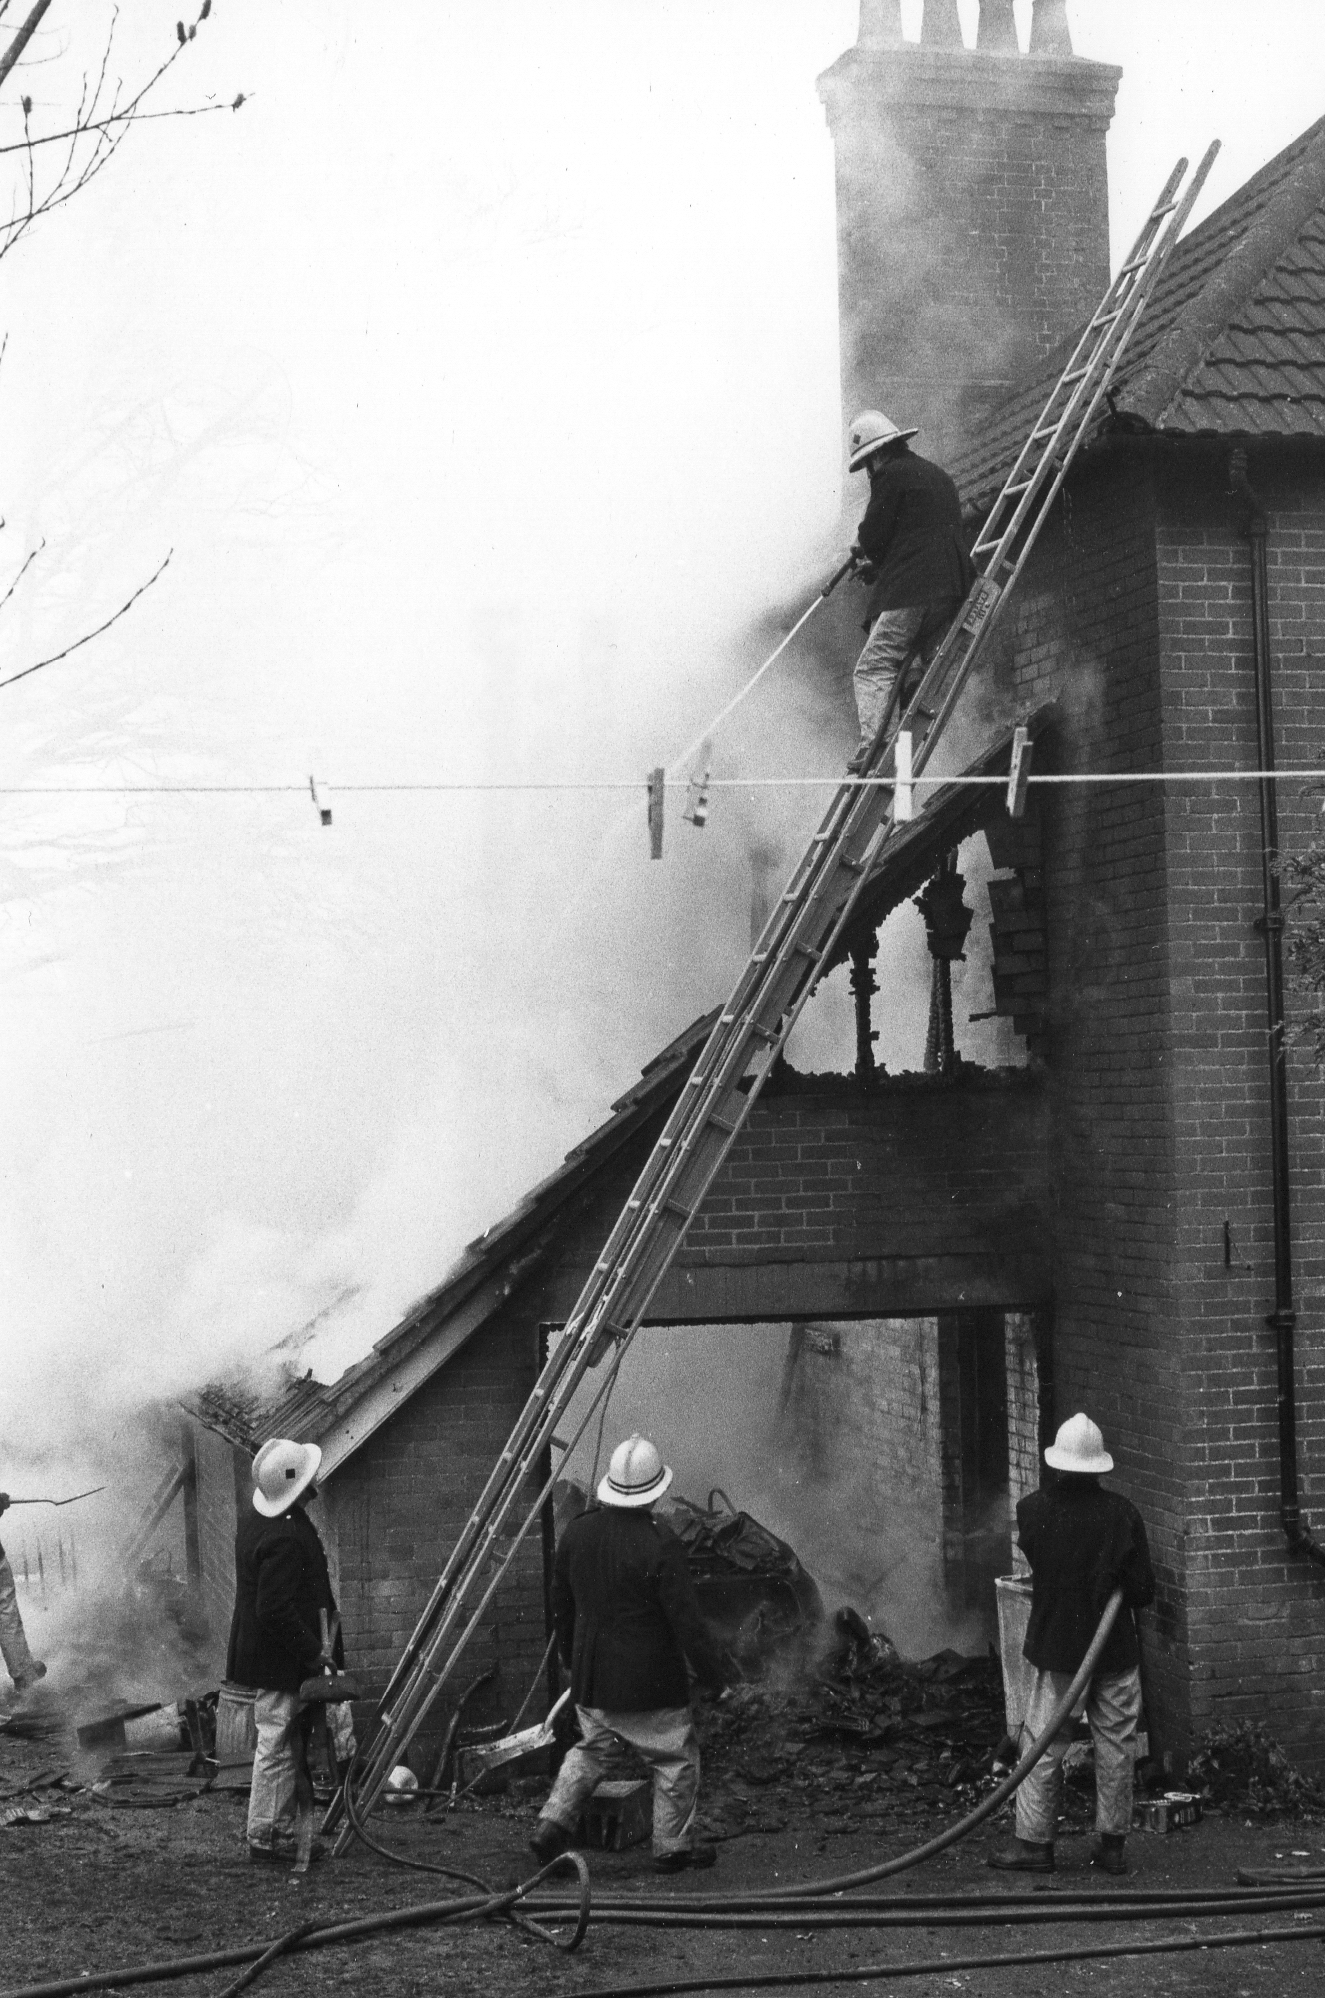 Bratton Clovelly Fire, April 4th, 1984. Photo courtesy of Gary Chapman.